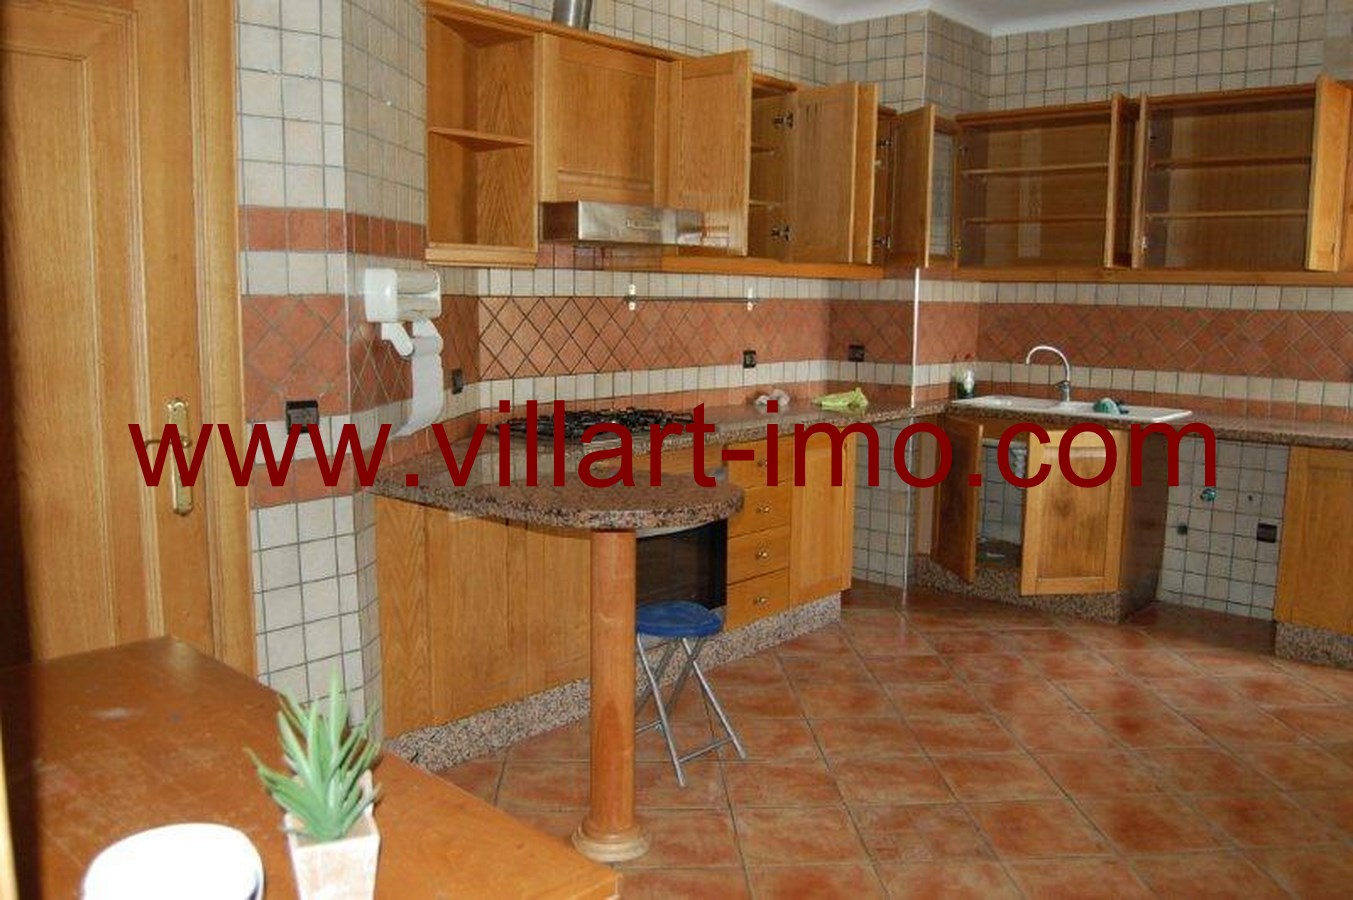 4-Location-Appartement-Non meublé-Tanger-Iberia-Cuisine-L484-Villart immo